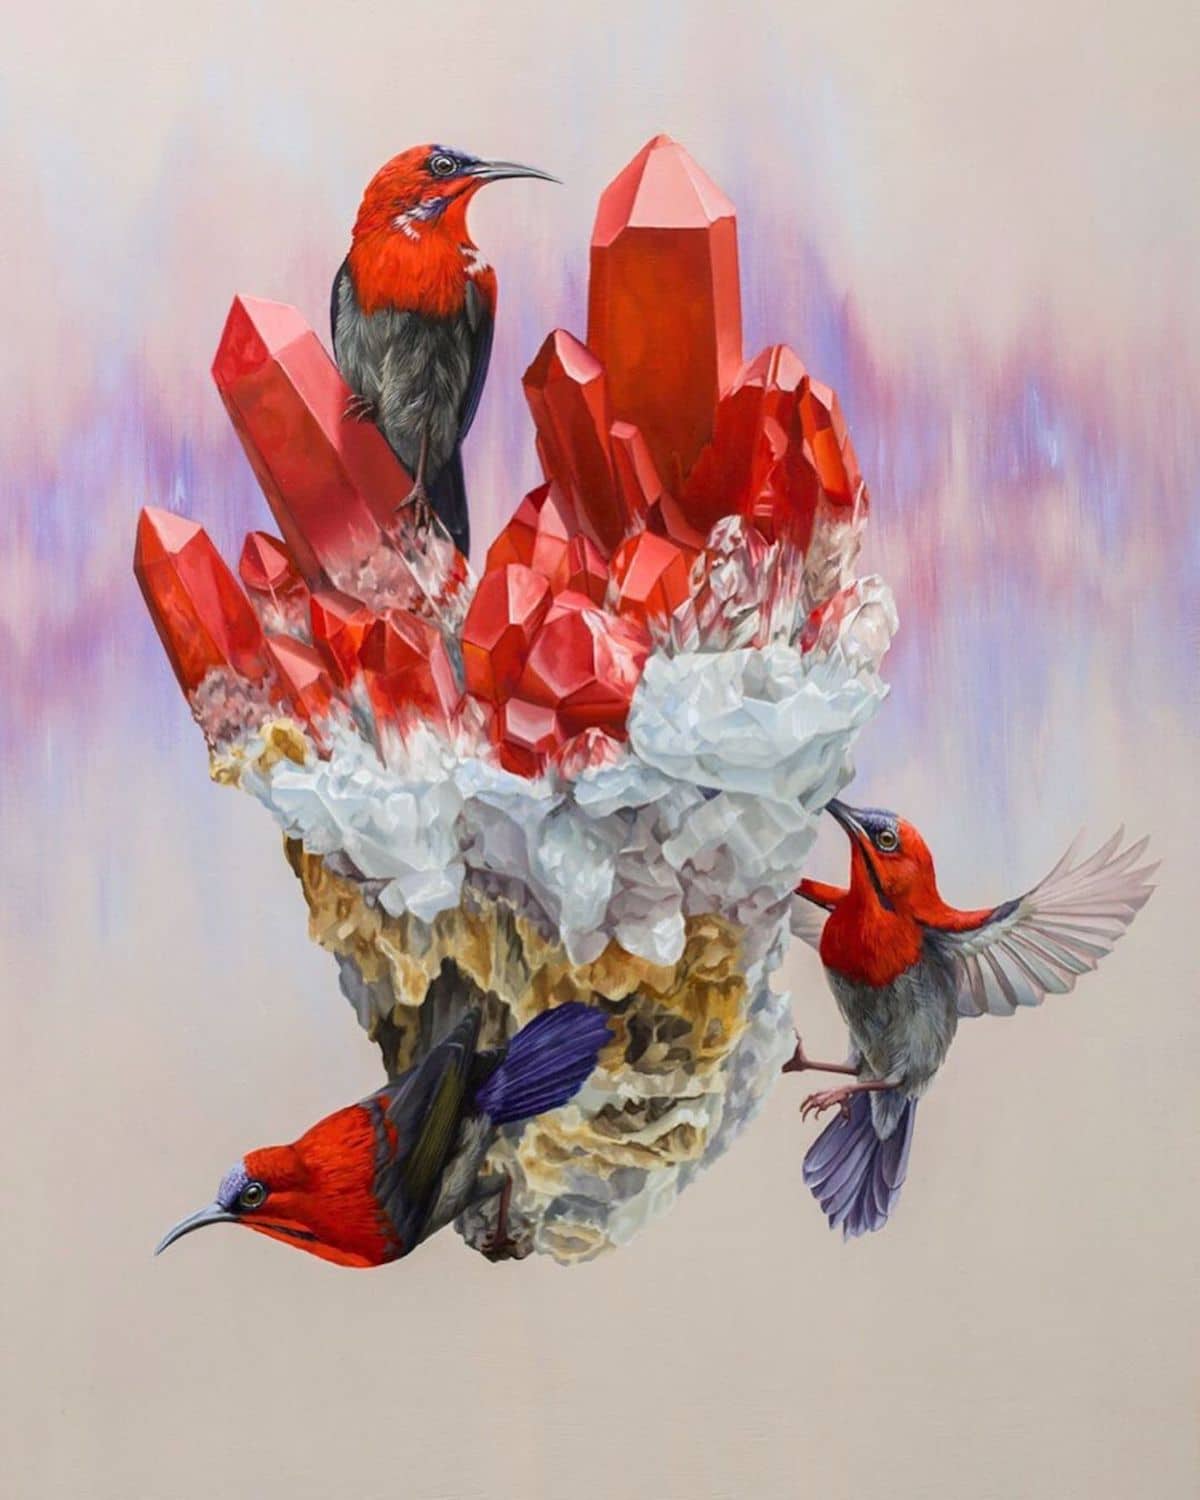 Surreal Bird Art by Jon Ching